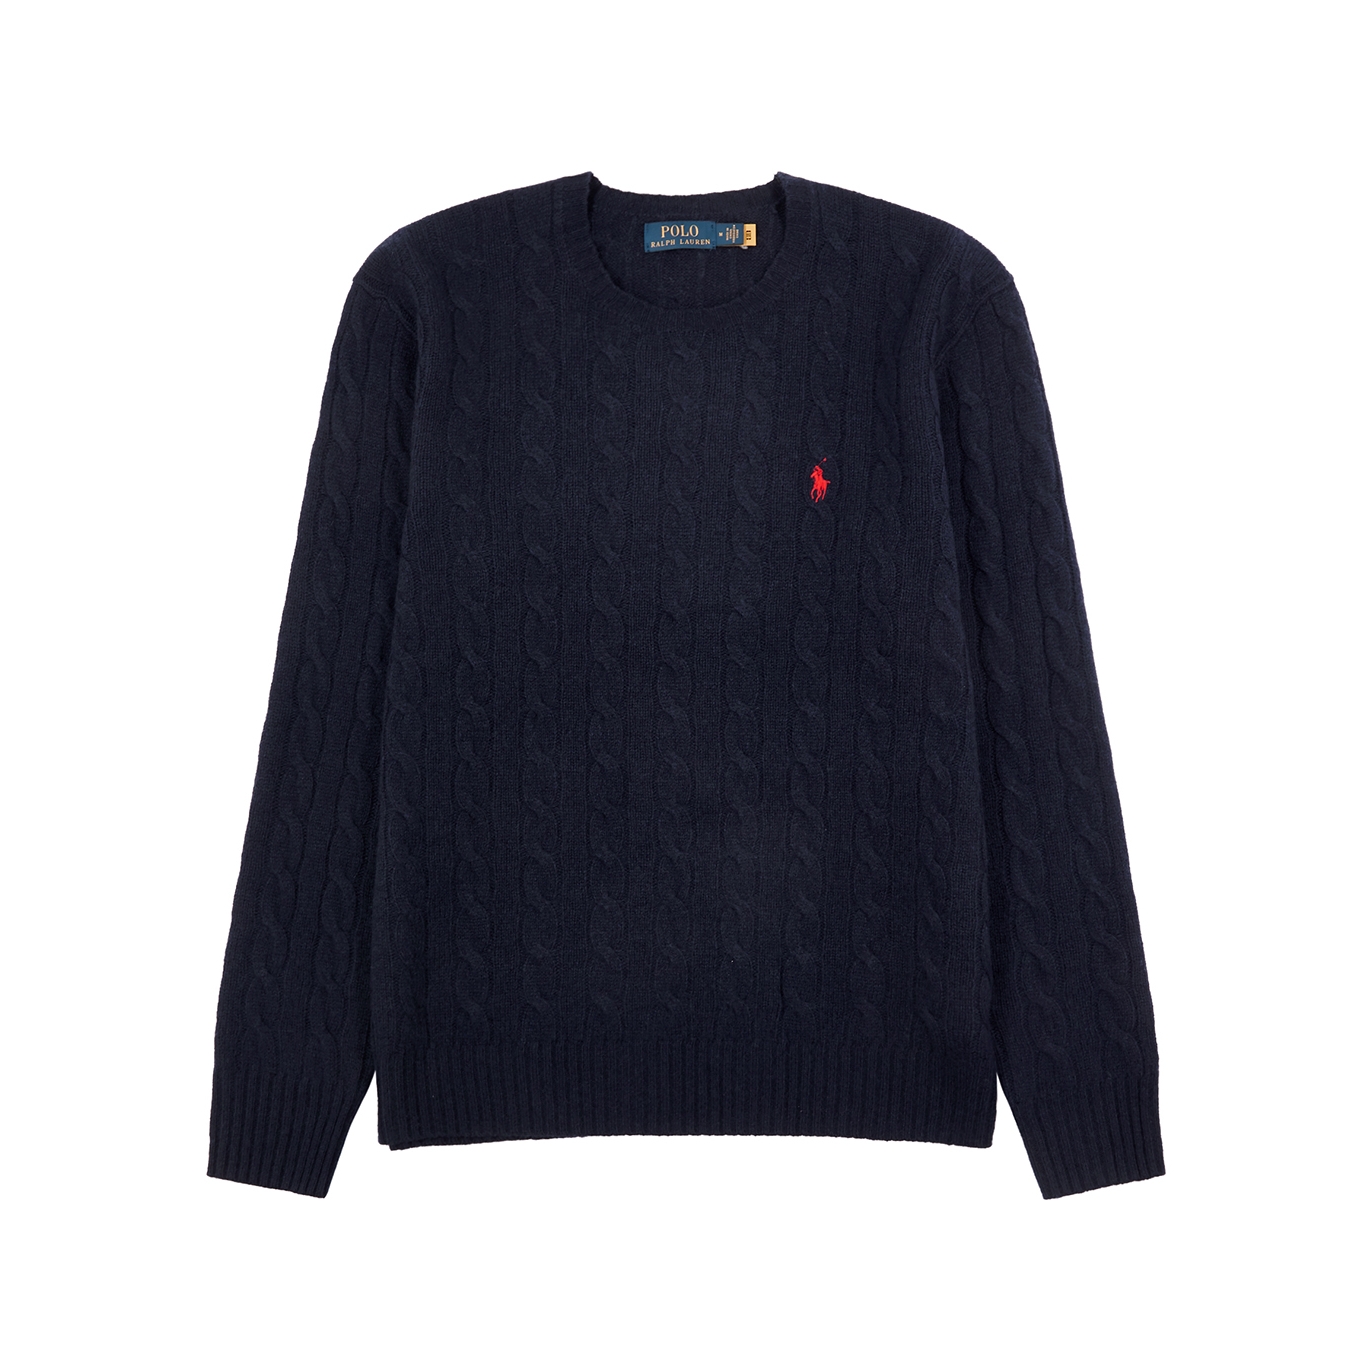 Polo Ralph Lauren Cable-knit Wool-blend Jumper - Navy - L